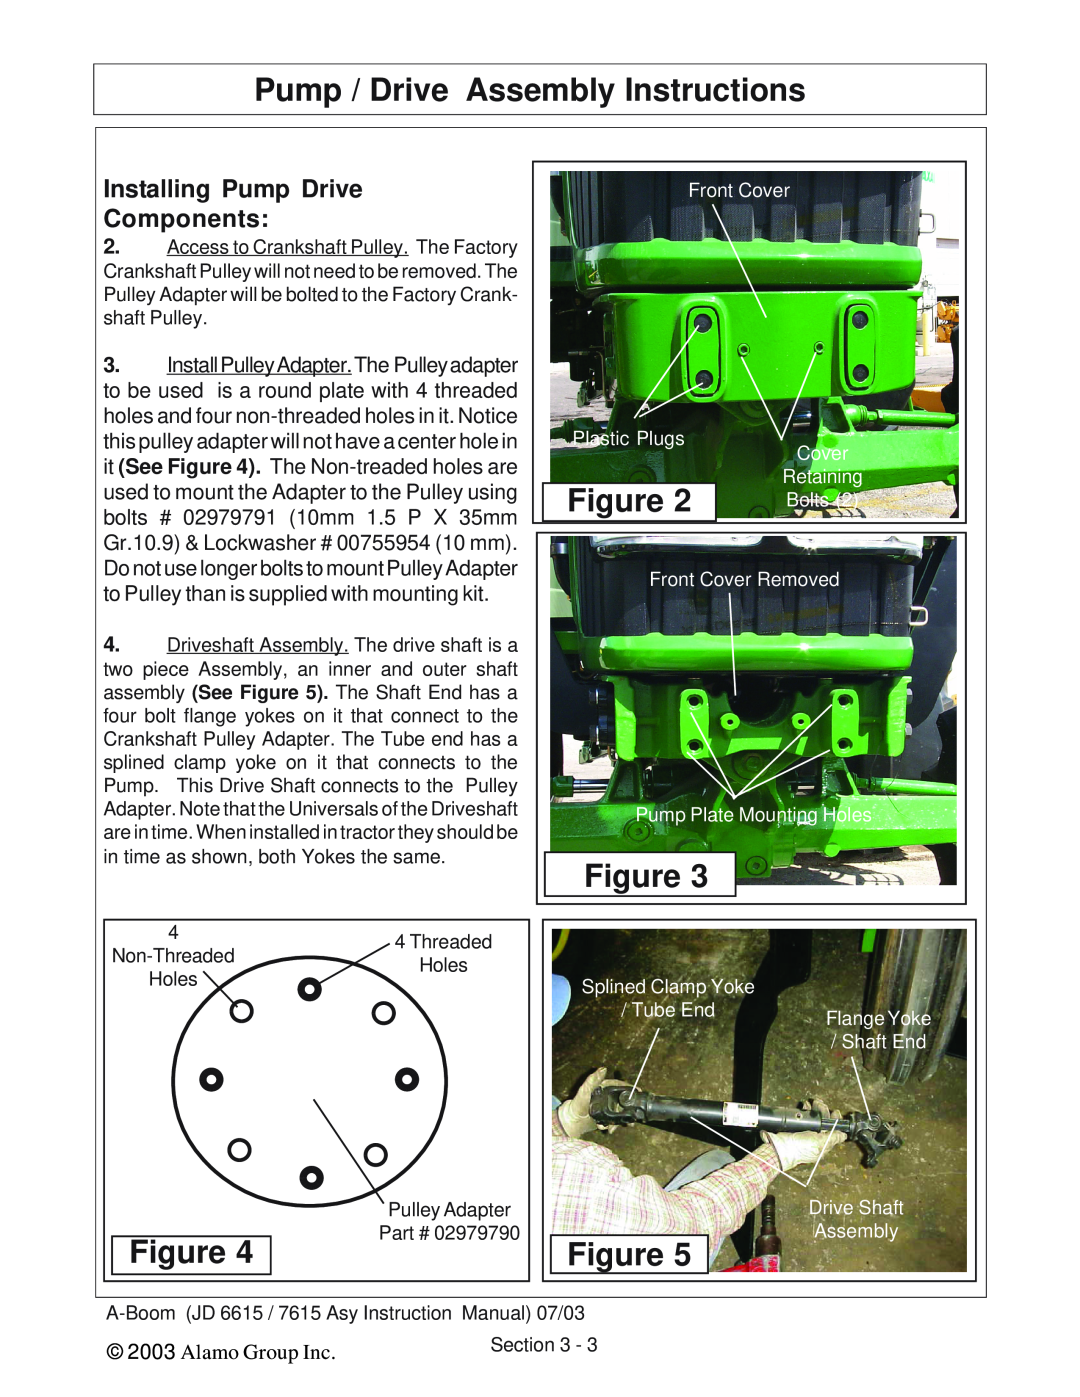 Alamo DSEB-D16/SAS Pump / Drive Assembly Instructions, Installing Pump Drive Components, Alamo Group Inc, Cover, Retaining 